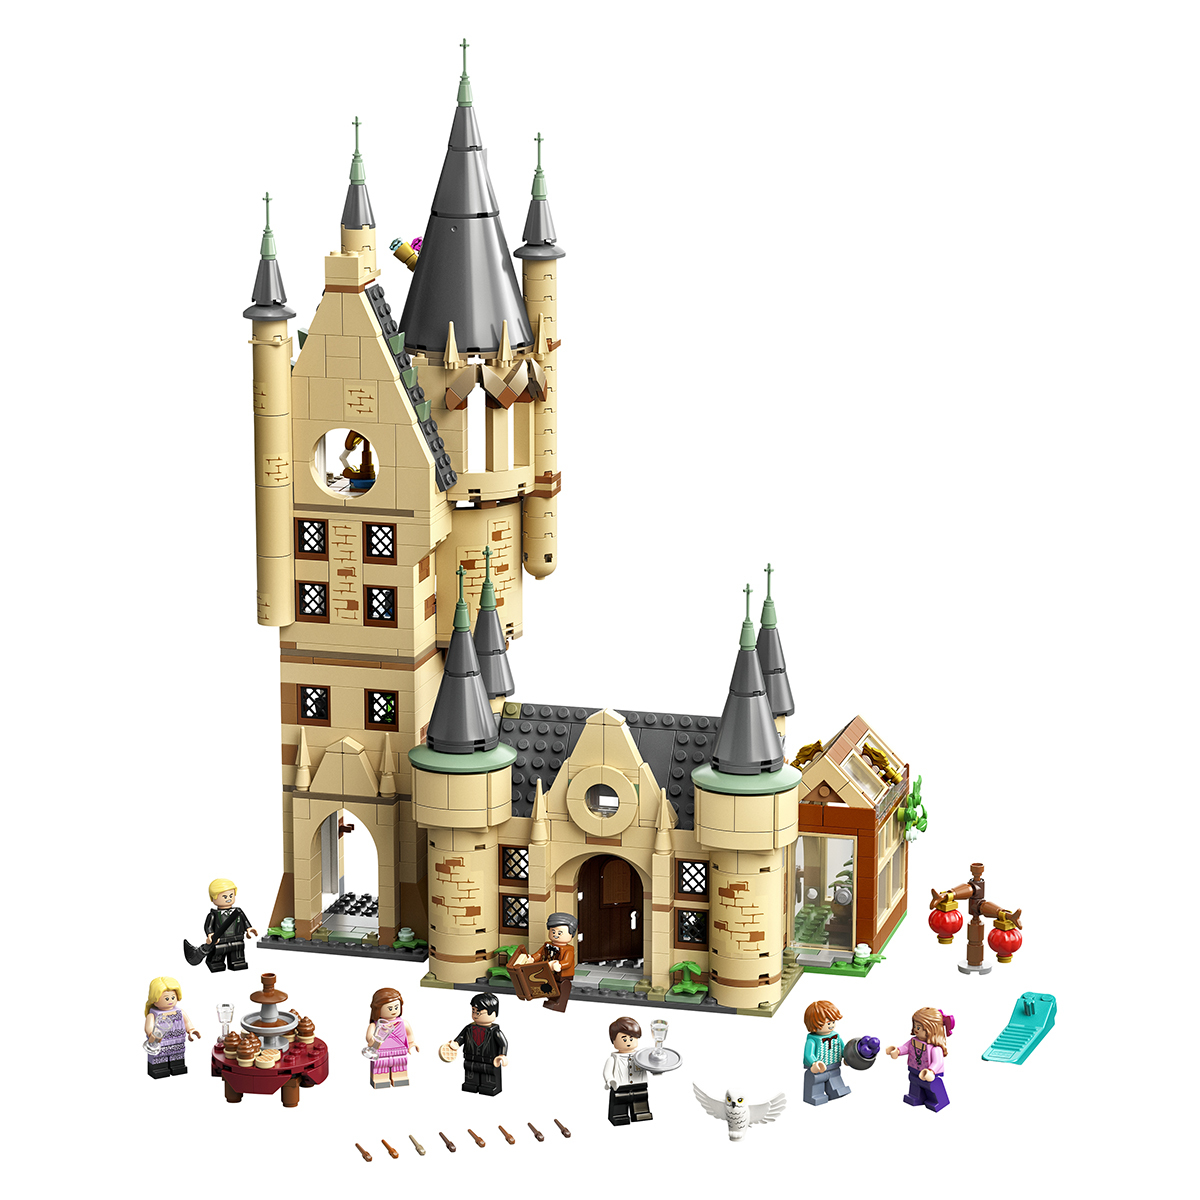 LEGO Harry Potter Hogwarts Astronomy Tower - Model #75974